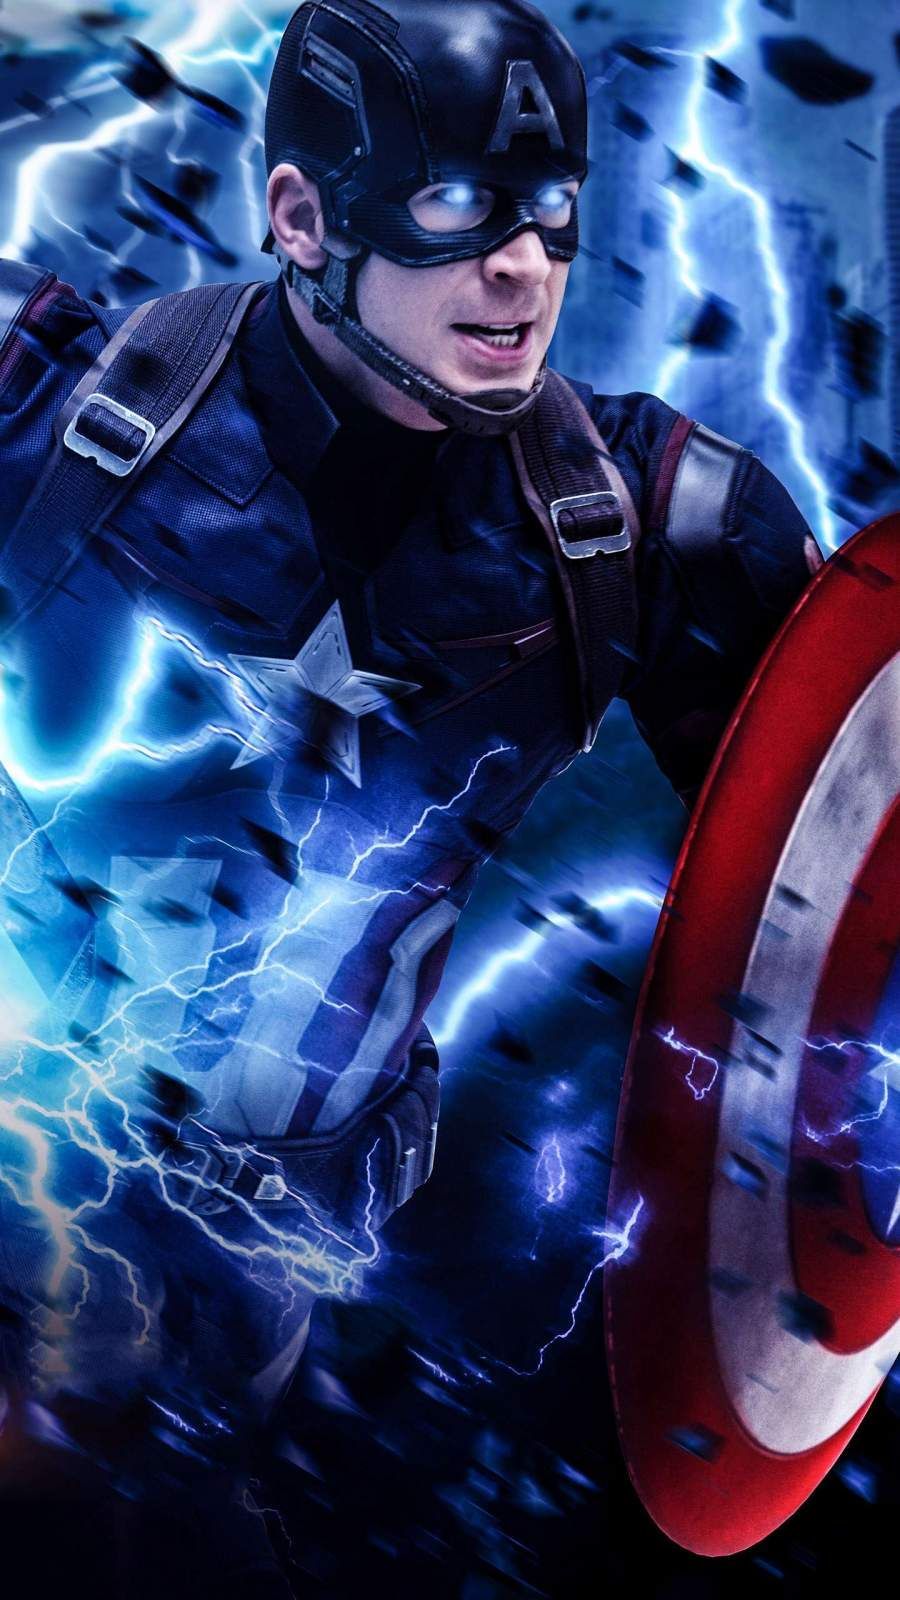 Captain America Thor Hammer Thunder IPhone Wallpaper. Captain america wallpaper, Marvel superhero posters, Marvel captain america